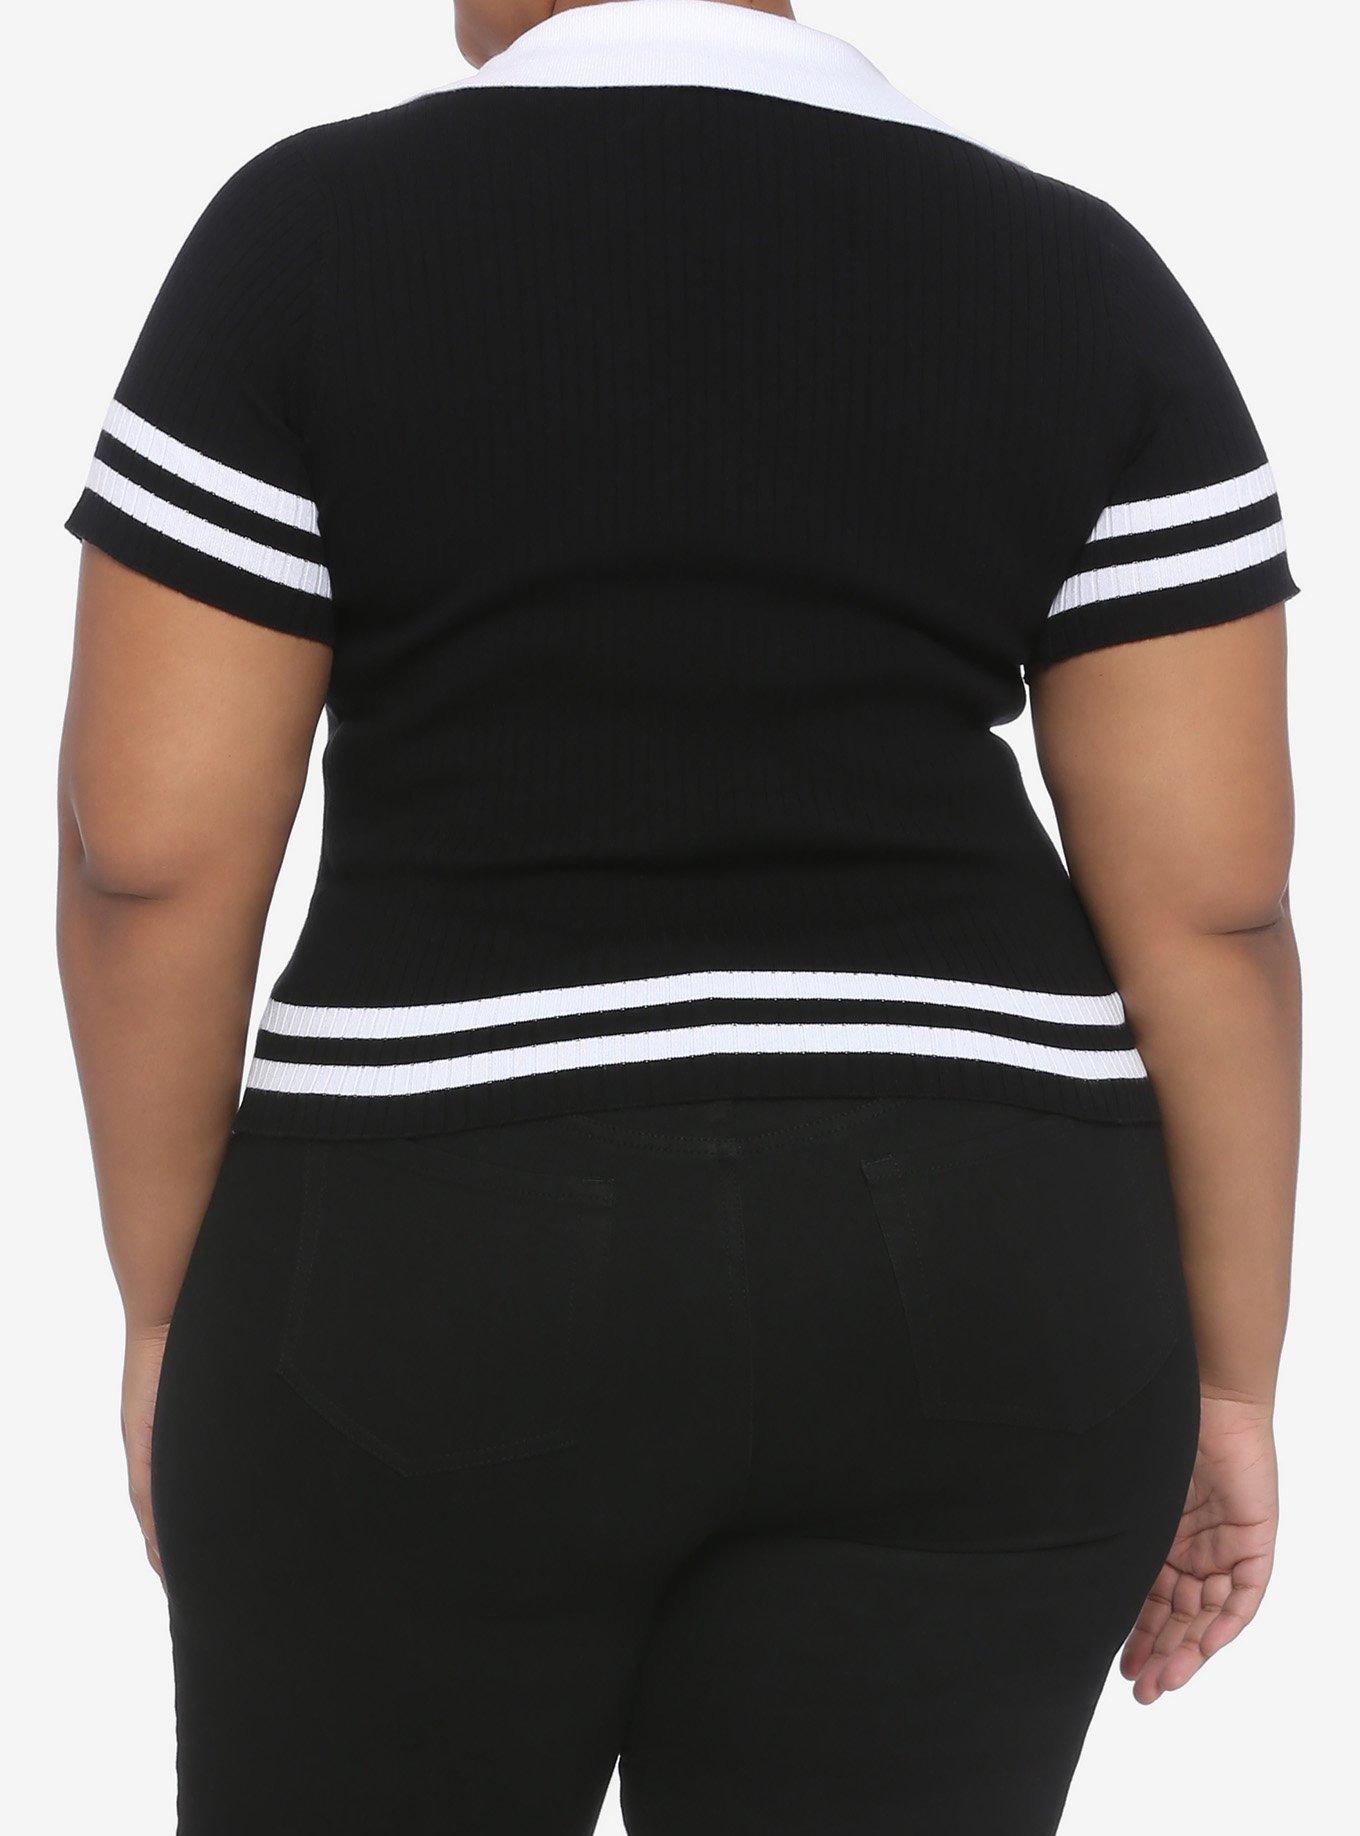 Black & White Coffin Crop Girls Polo Shirt Plus Size, BLACK, alternate